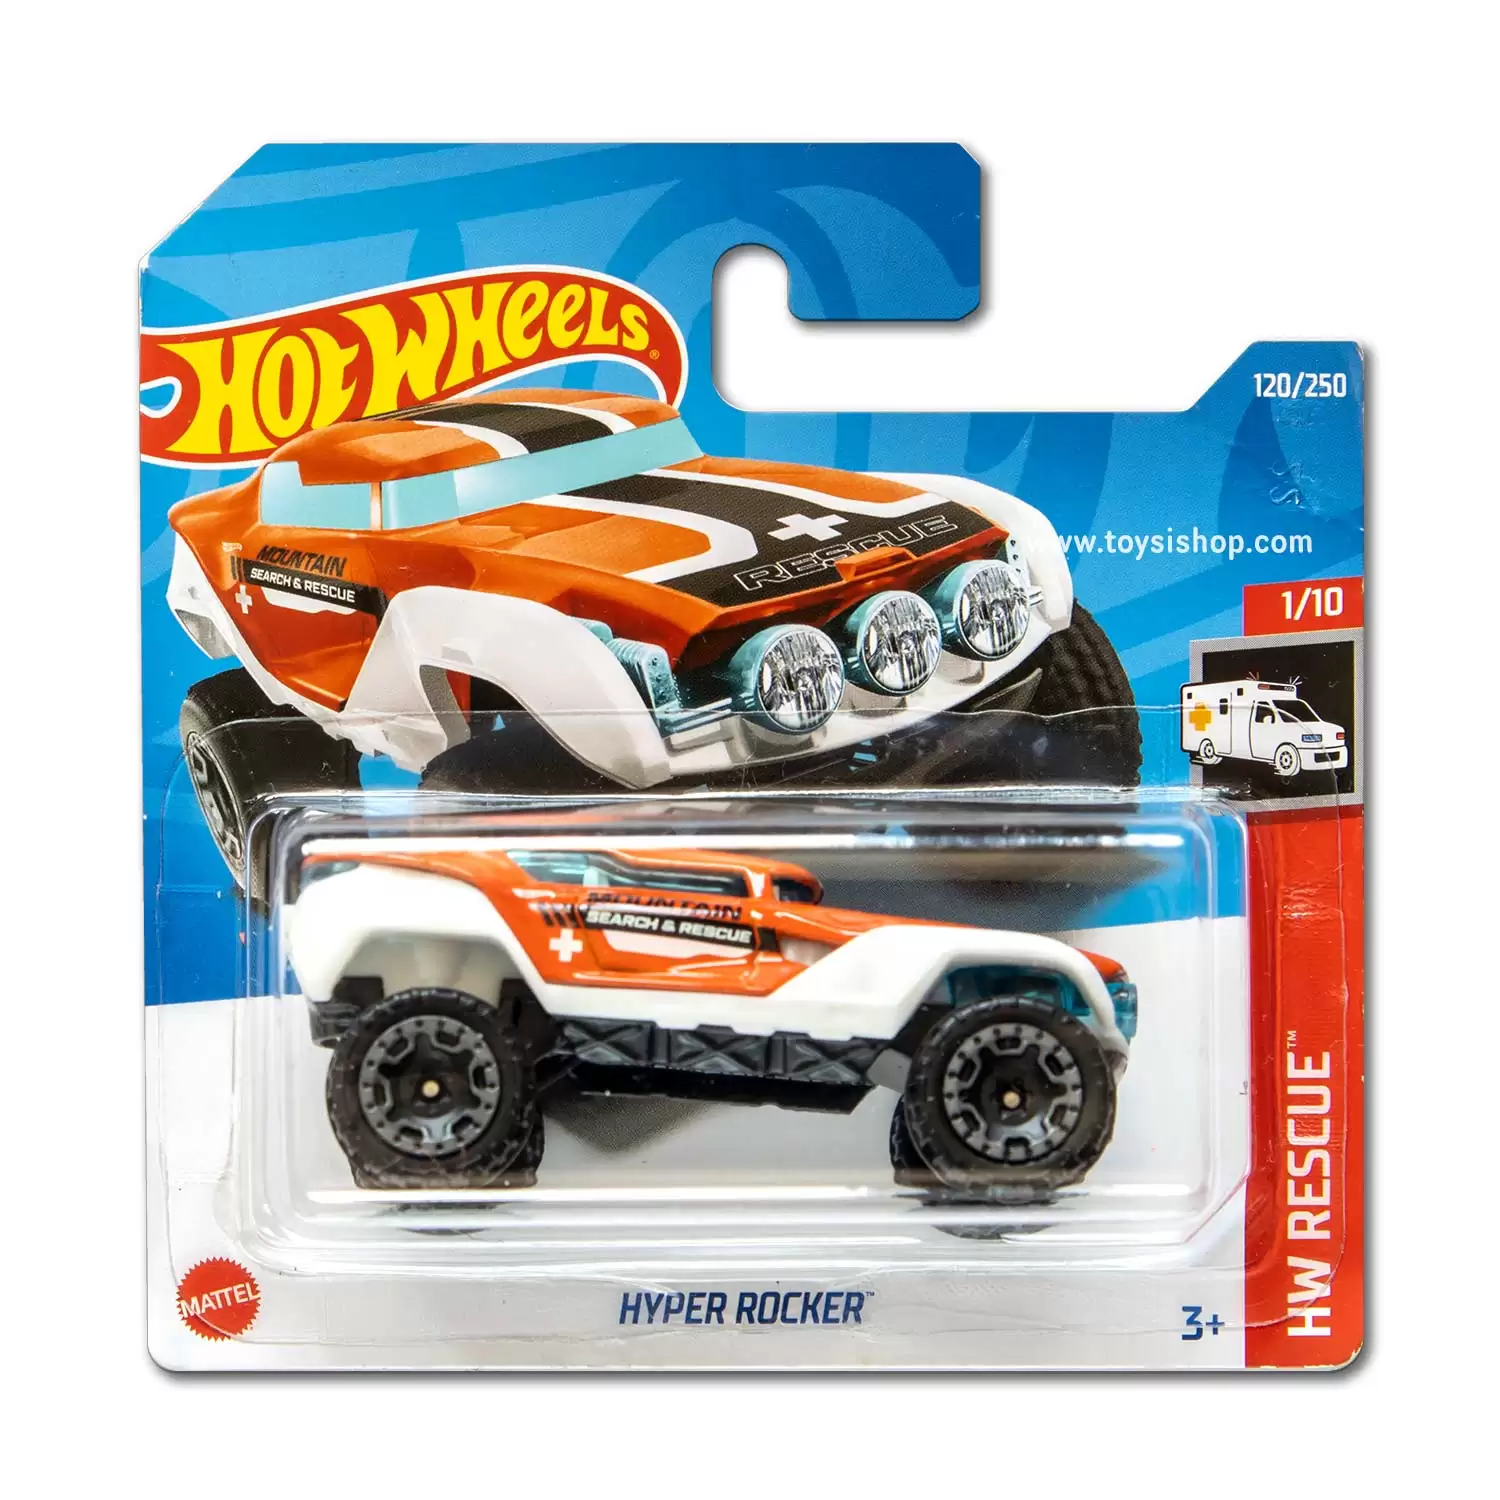 Hot Wheels - Hyper Rocker - Rescue Serisi - 120